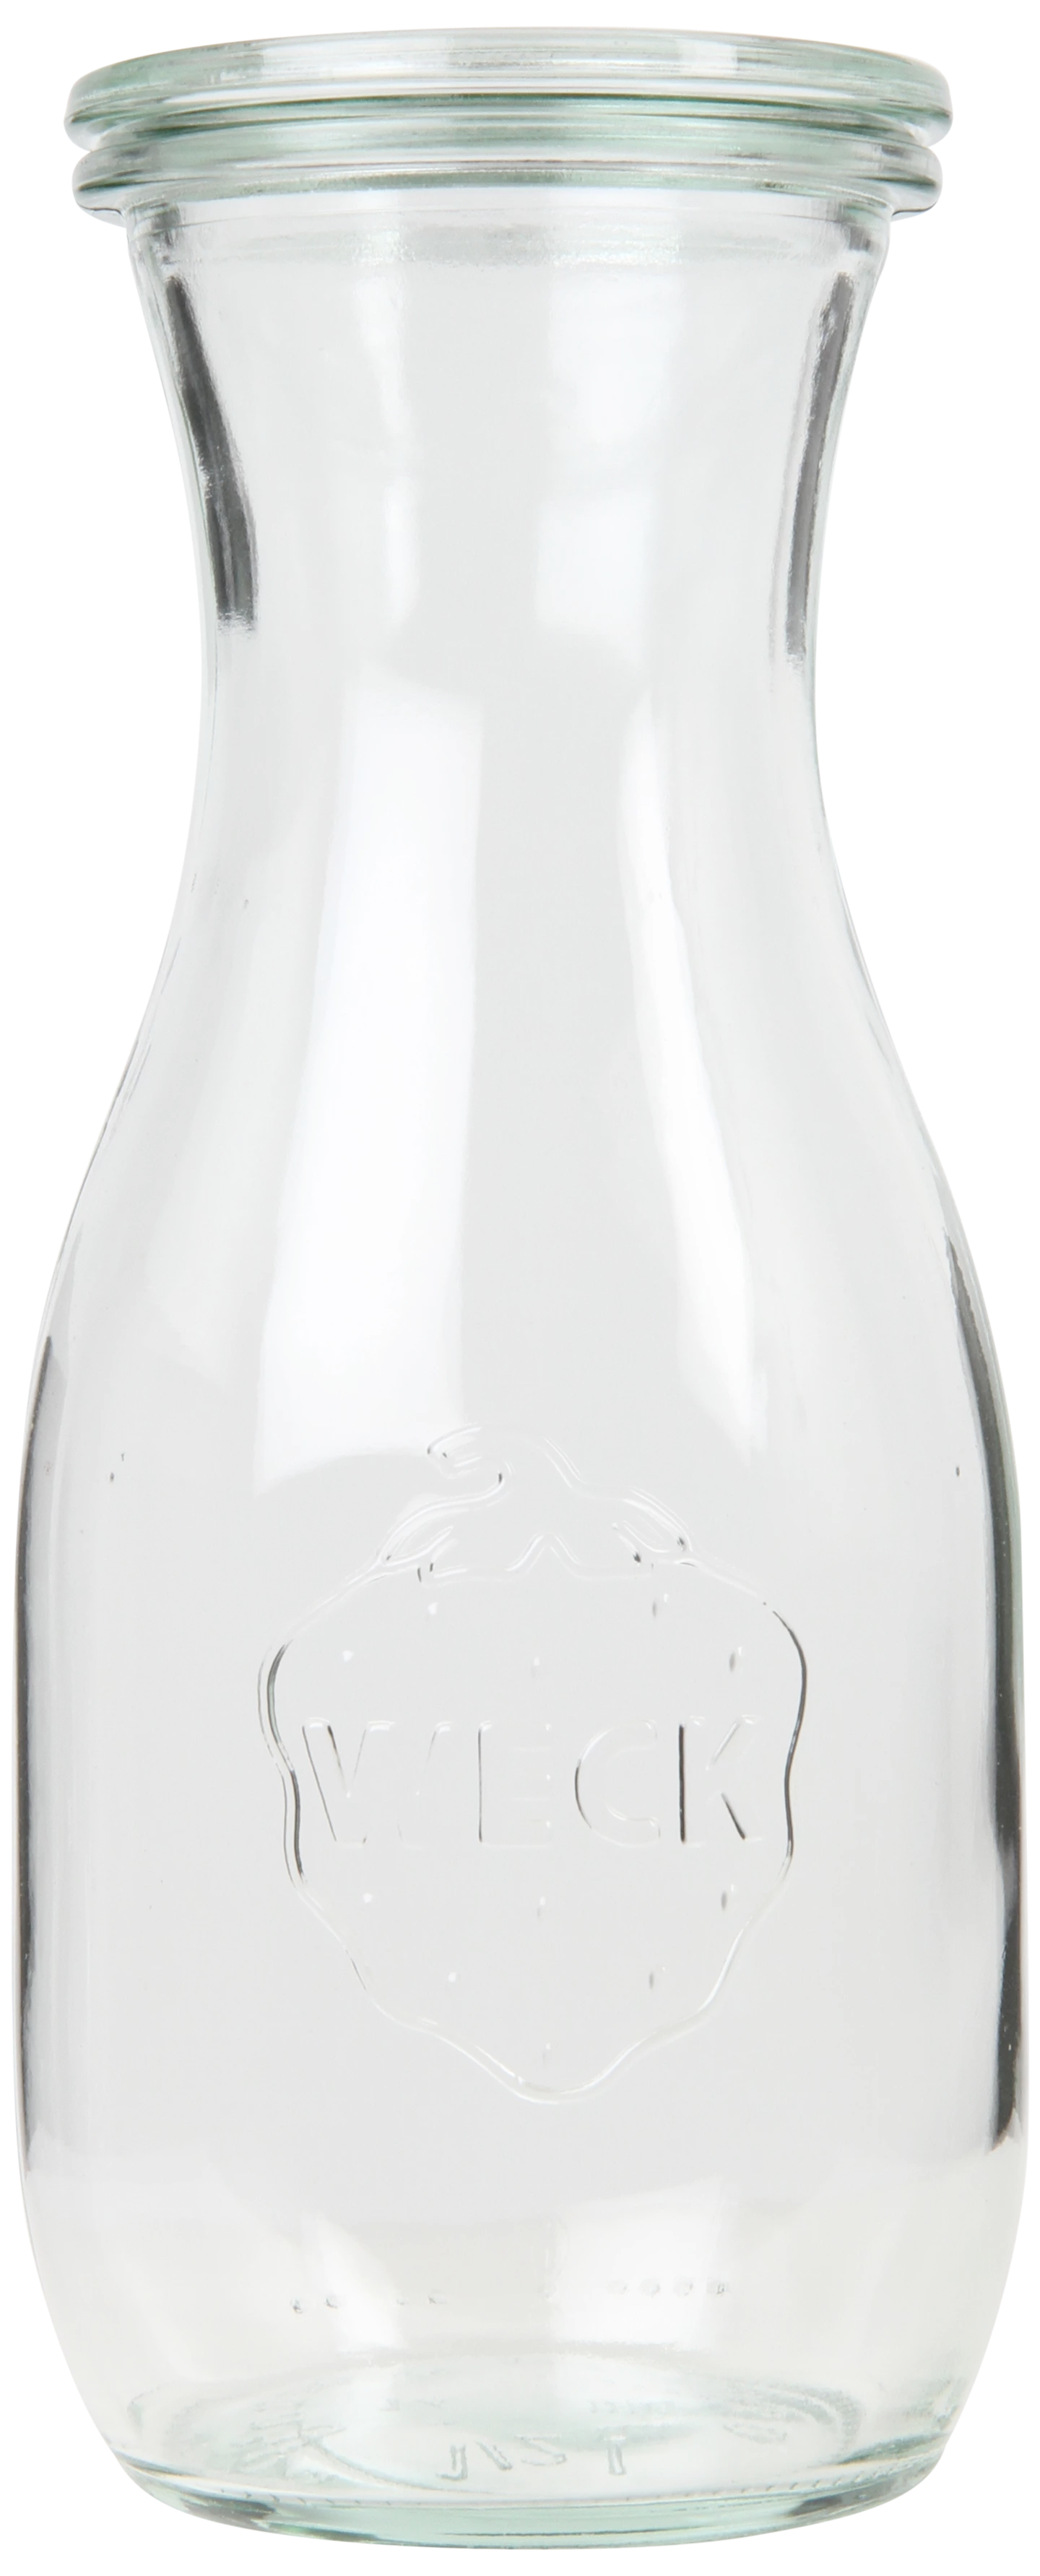 Løgismose Grej Weck Saftflaske 0,5 L (764) (60mm) - 6 stk mlåg - 127389